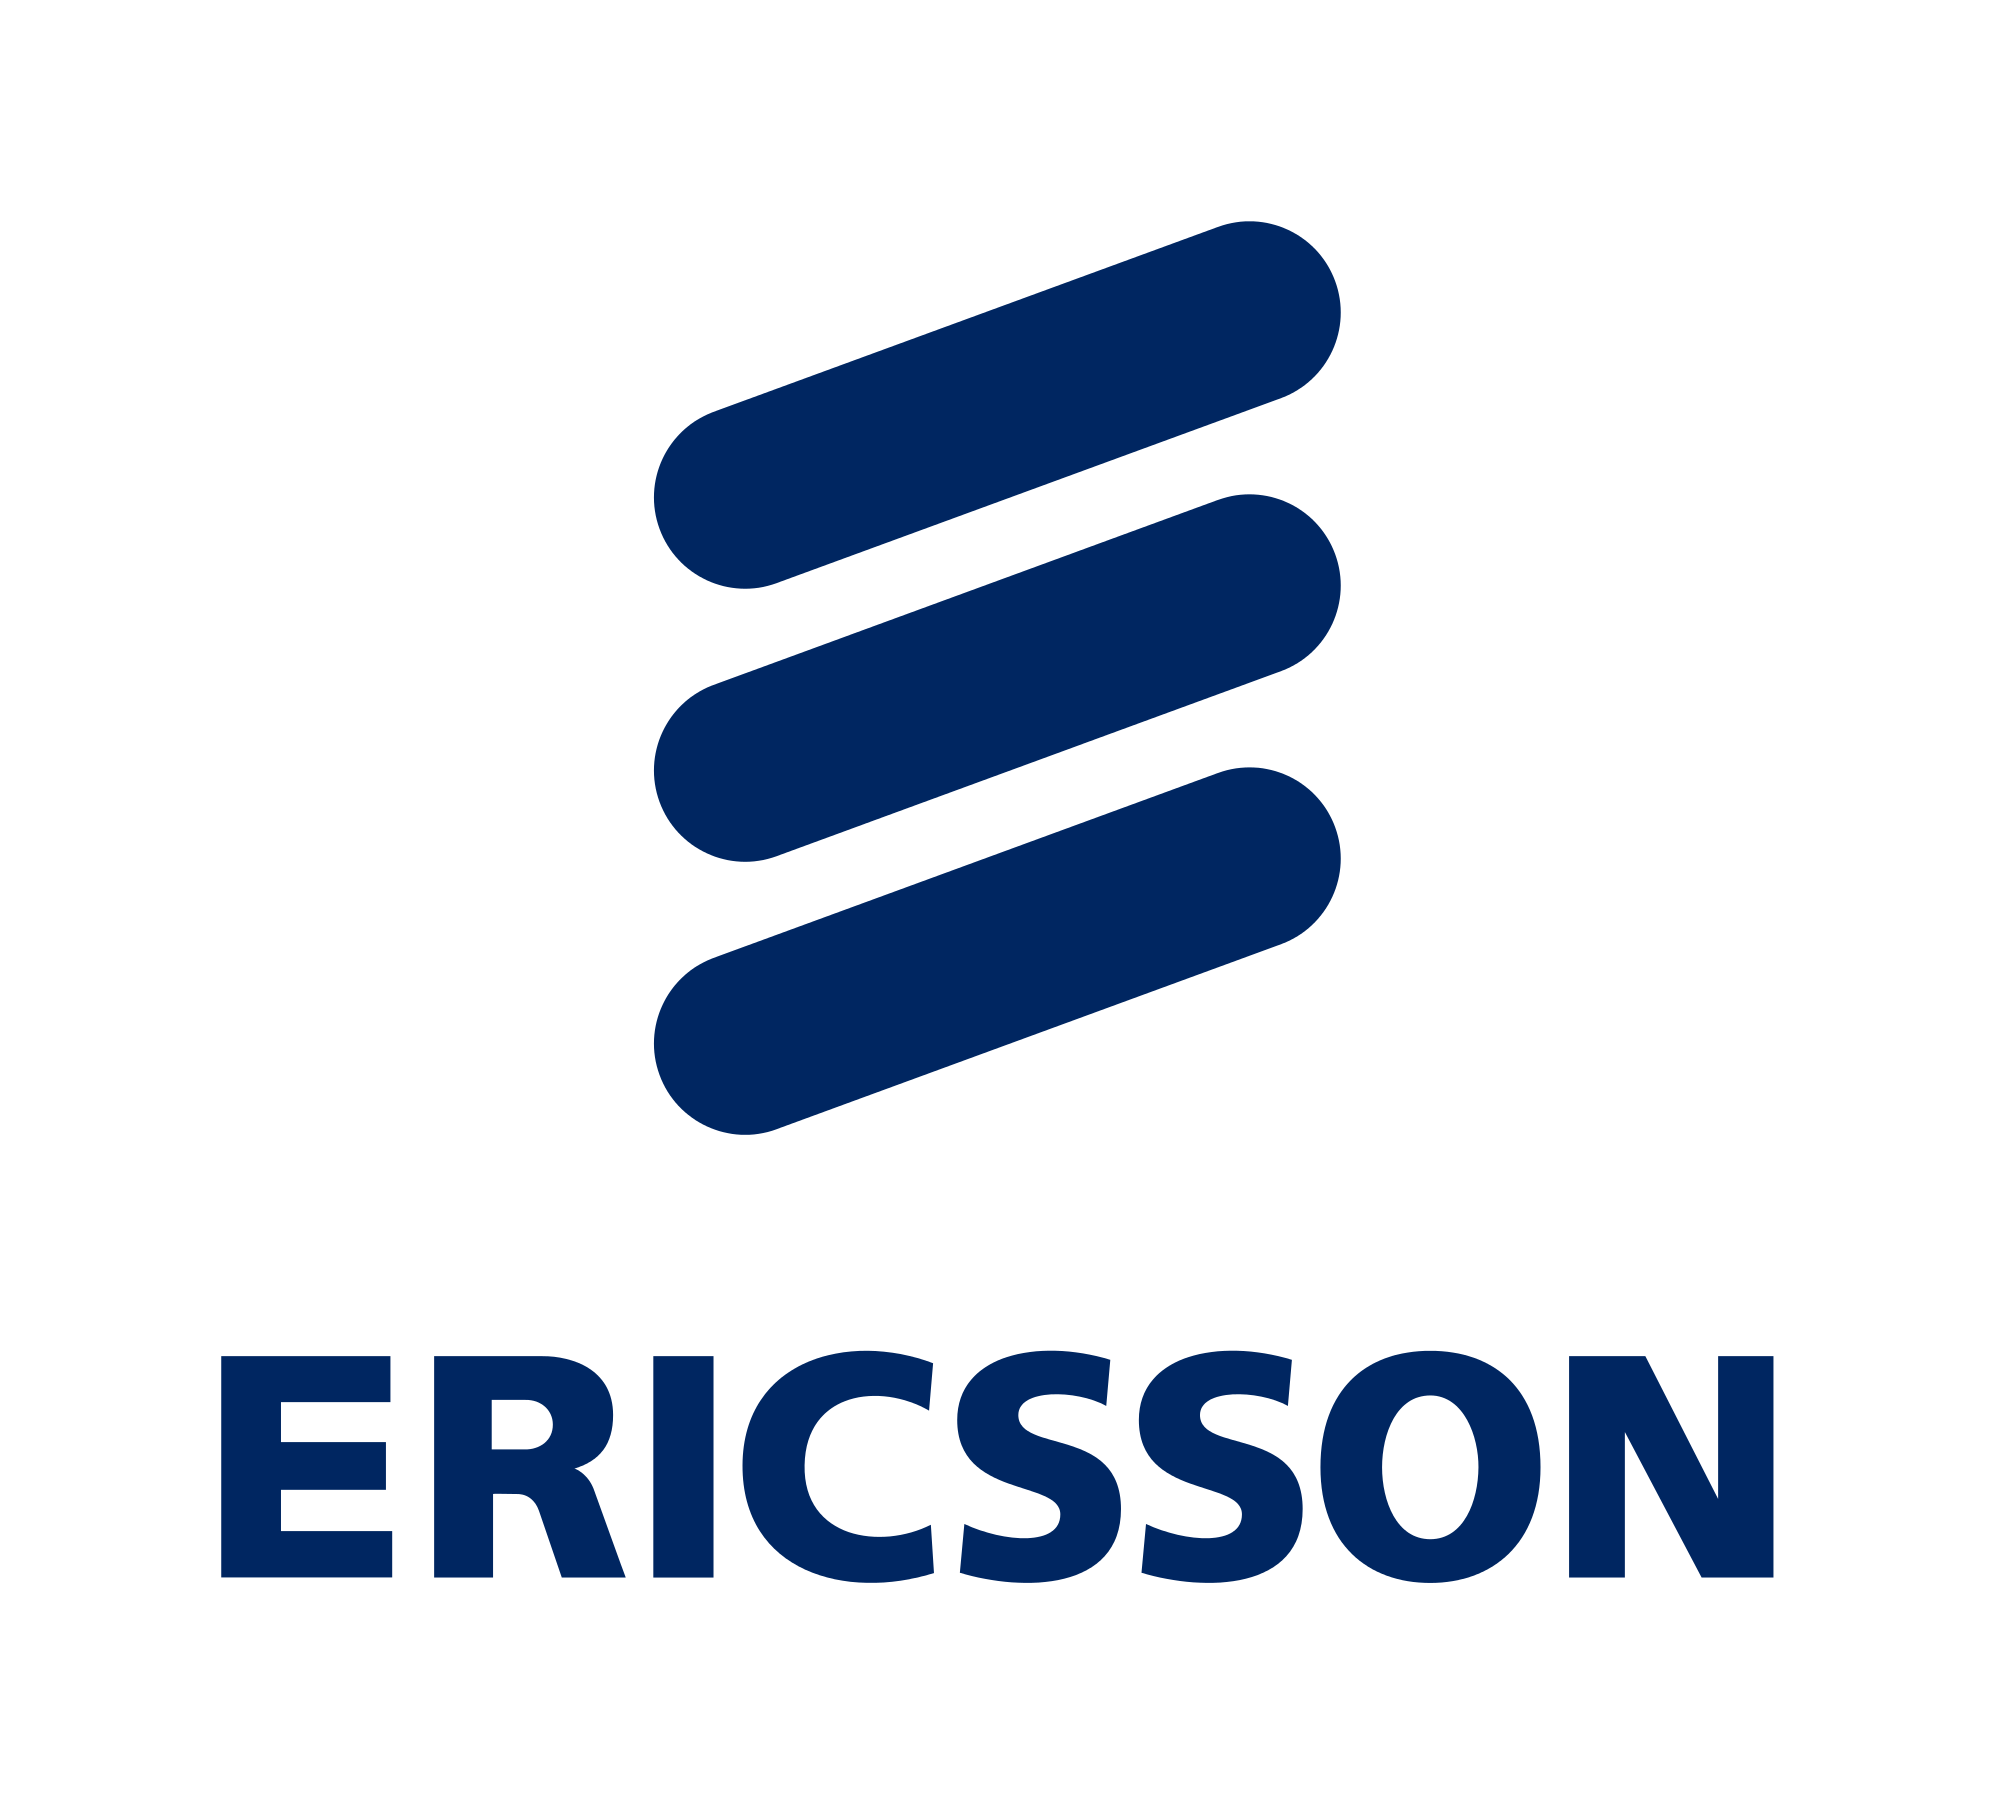 Leading Telecommunications Company Logo - Ericsson Is A World Leading Provider Of Telecommunications Equipment